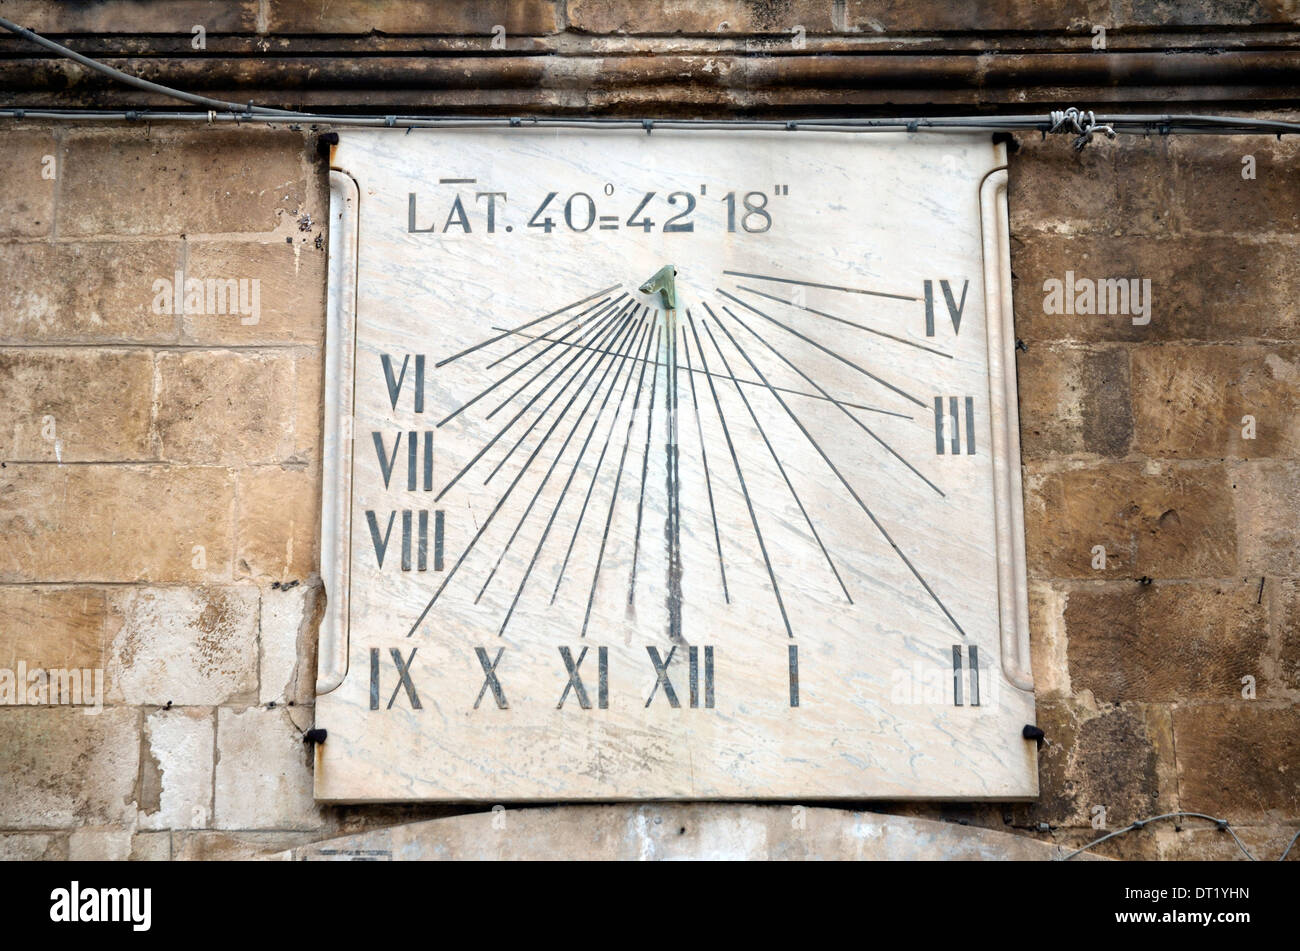 Sun Dial Time Piece and Latitude, Civic building, Martina Franca, Valle d'Itria, Puglia, Italy, Europe. Stock Photo